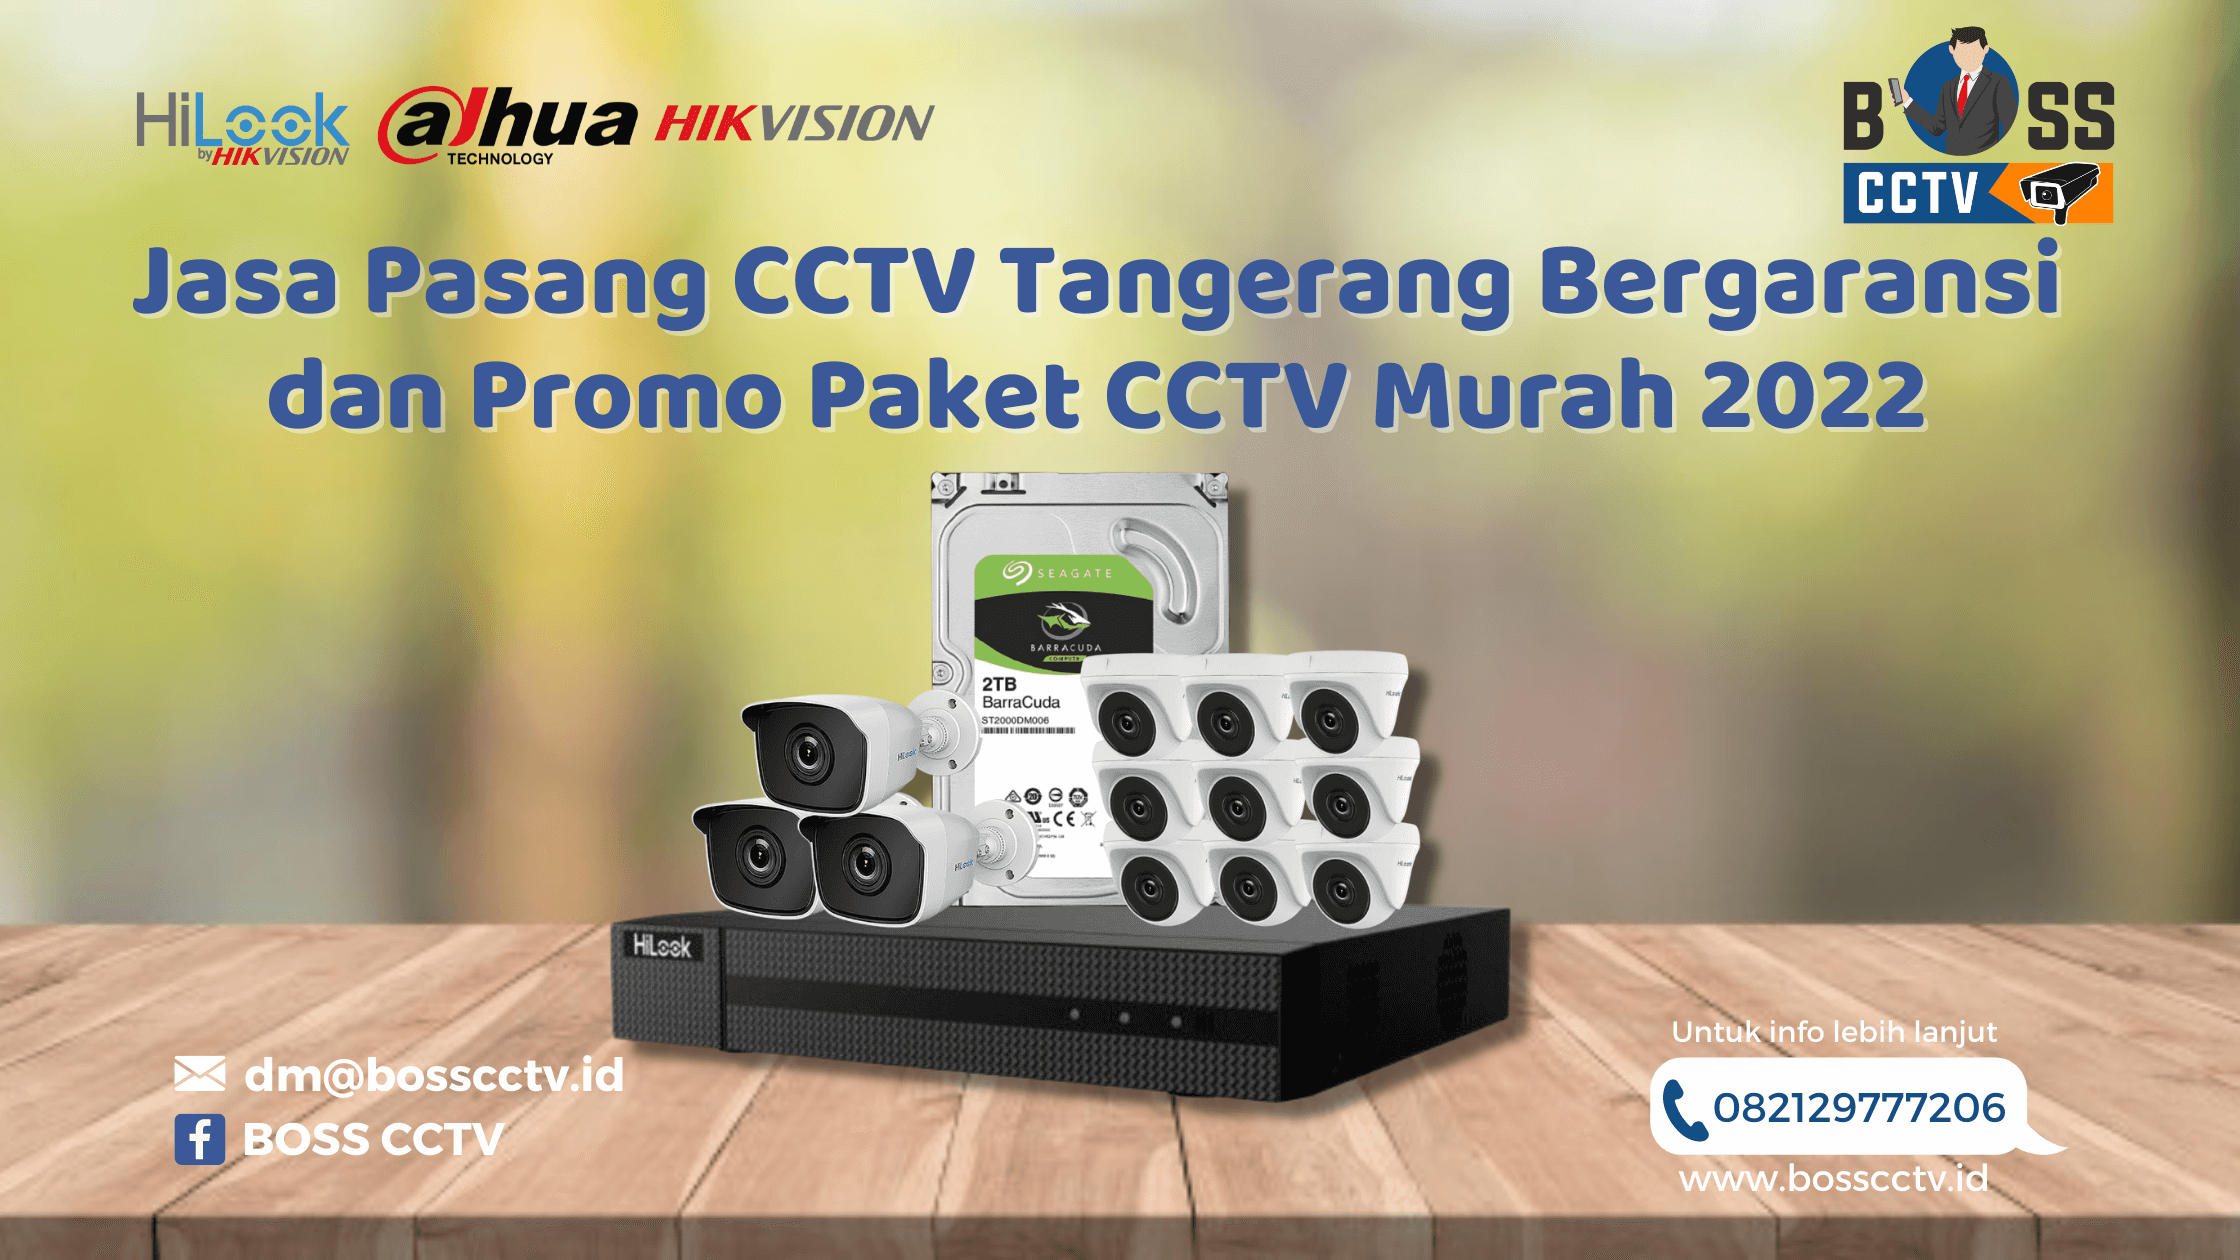 Jasa Pasang CCTV Tangerang dan Promo Paket CCTV Murah 2022 BOSS CCTV